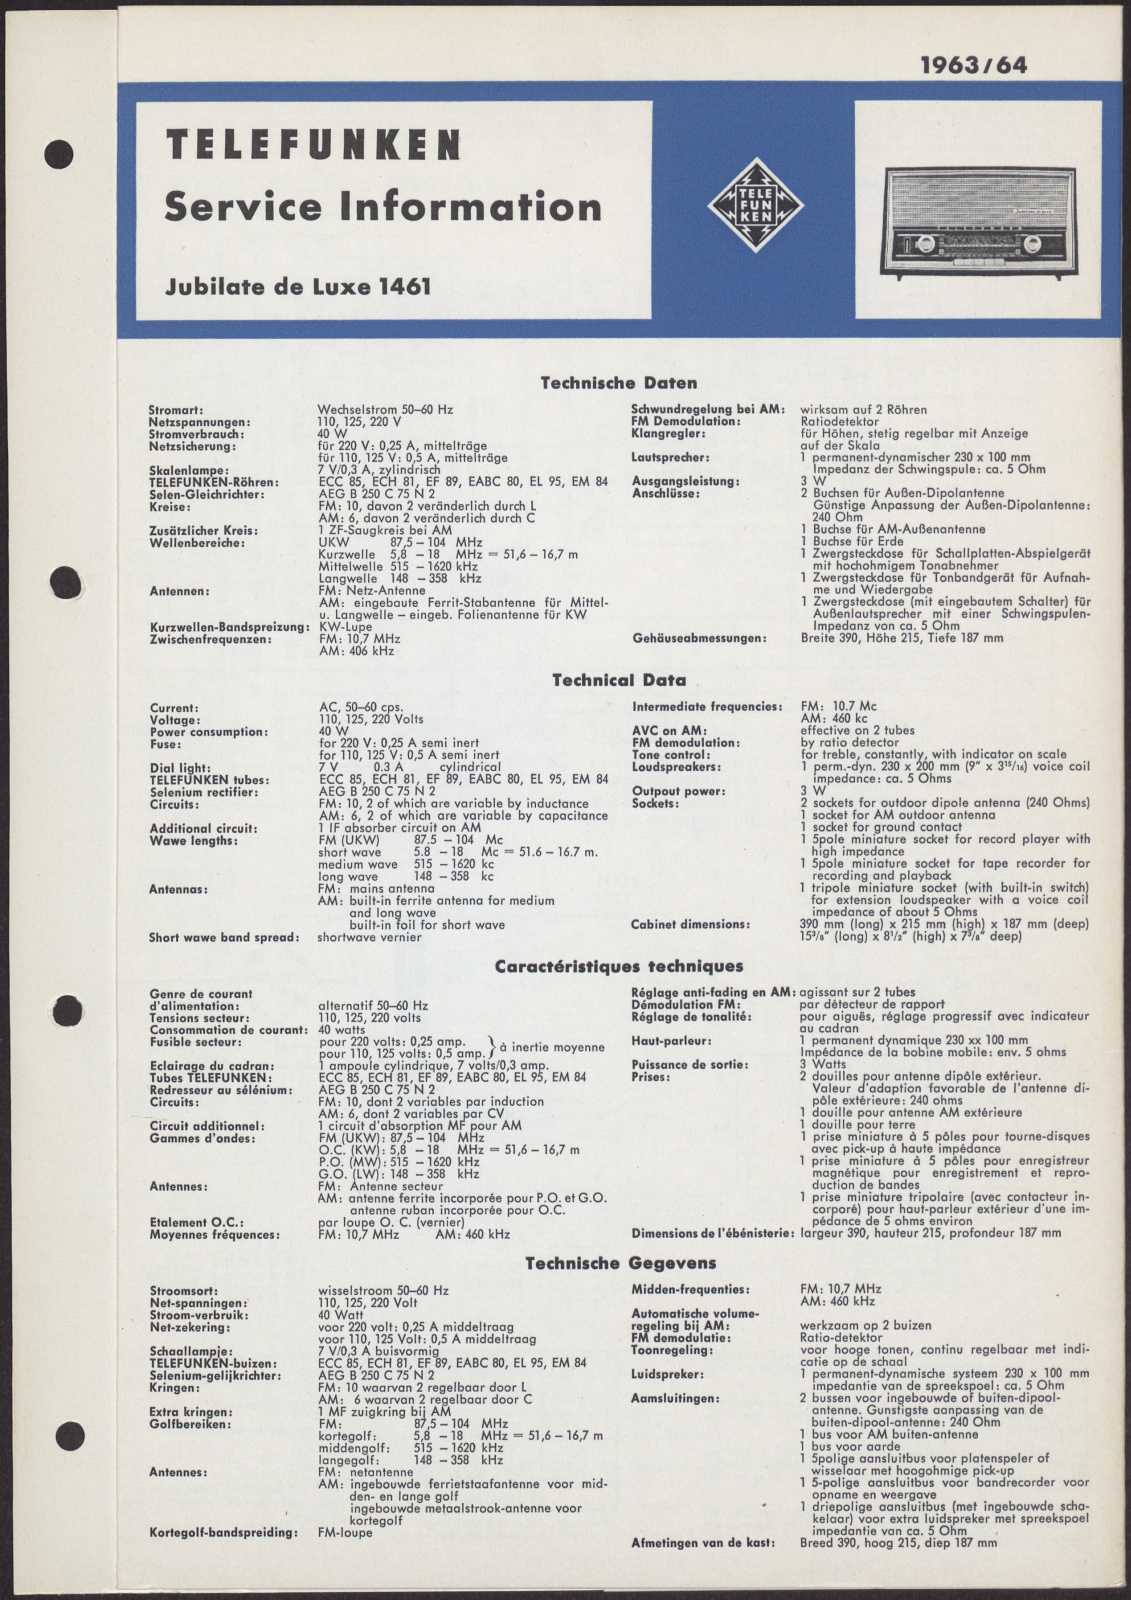 Bedienungsanleitung: Telefunken Service Information Jubilate de Luxe 1461 (Stiftung Deutsches Technikmuseum Berlin CC0)